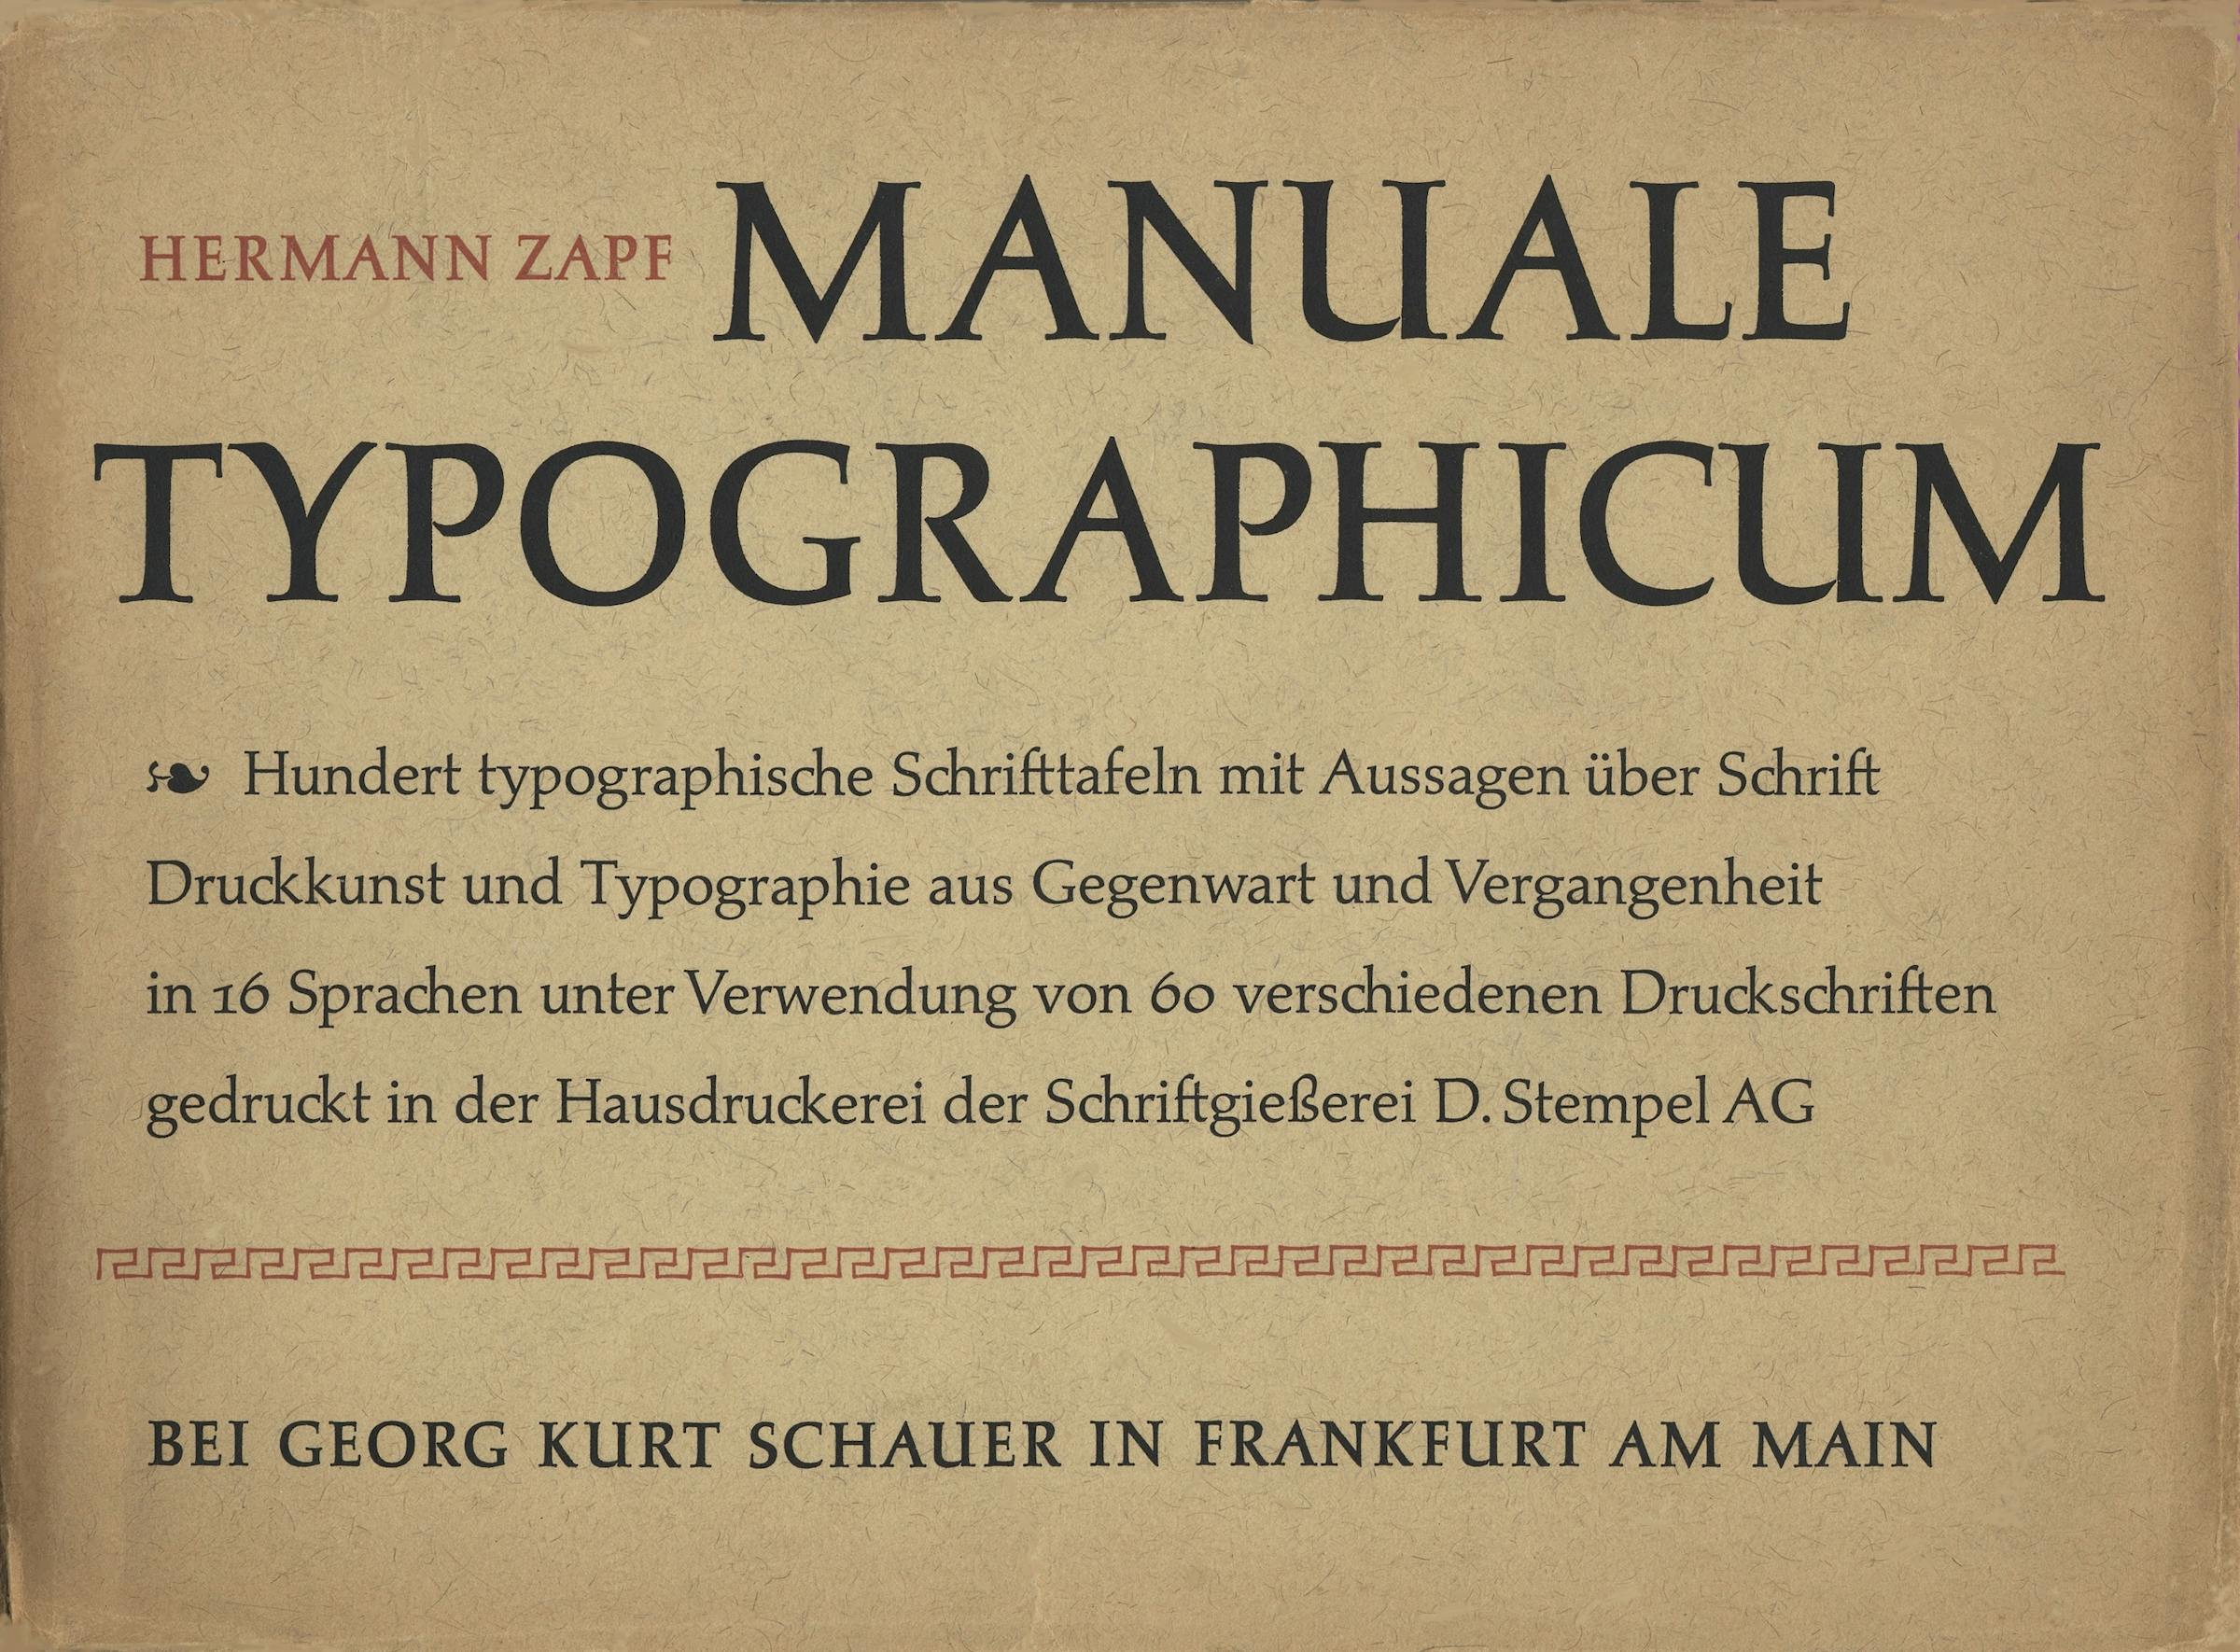 Hermann Zapf’s Manuale Typographicum